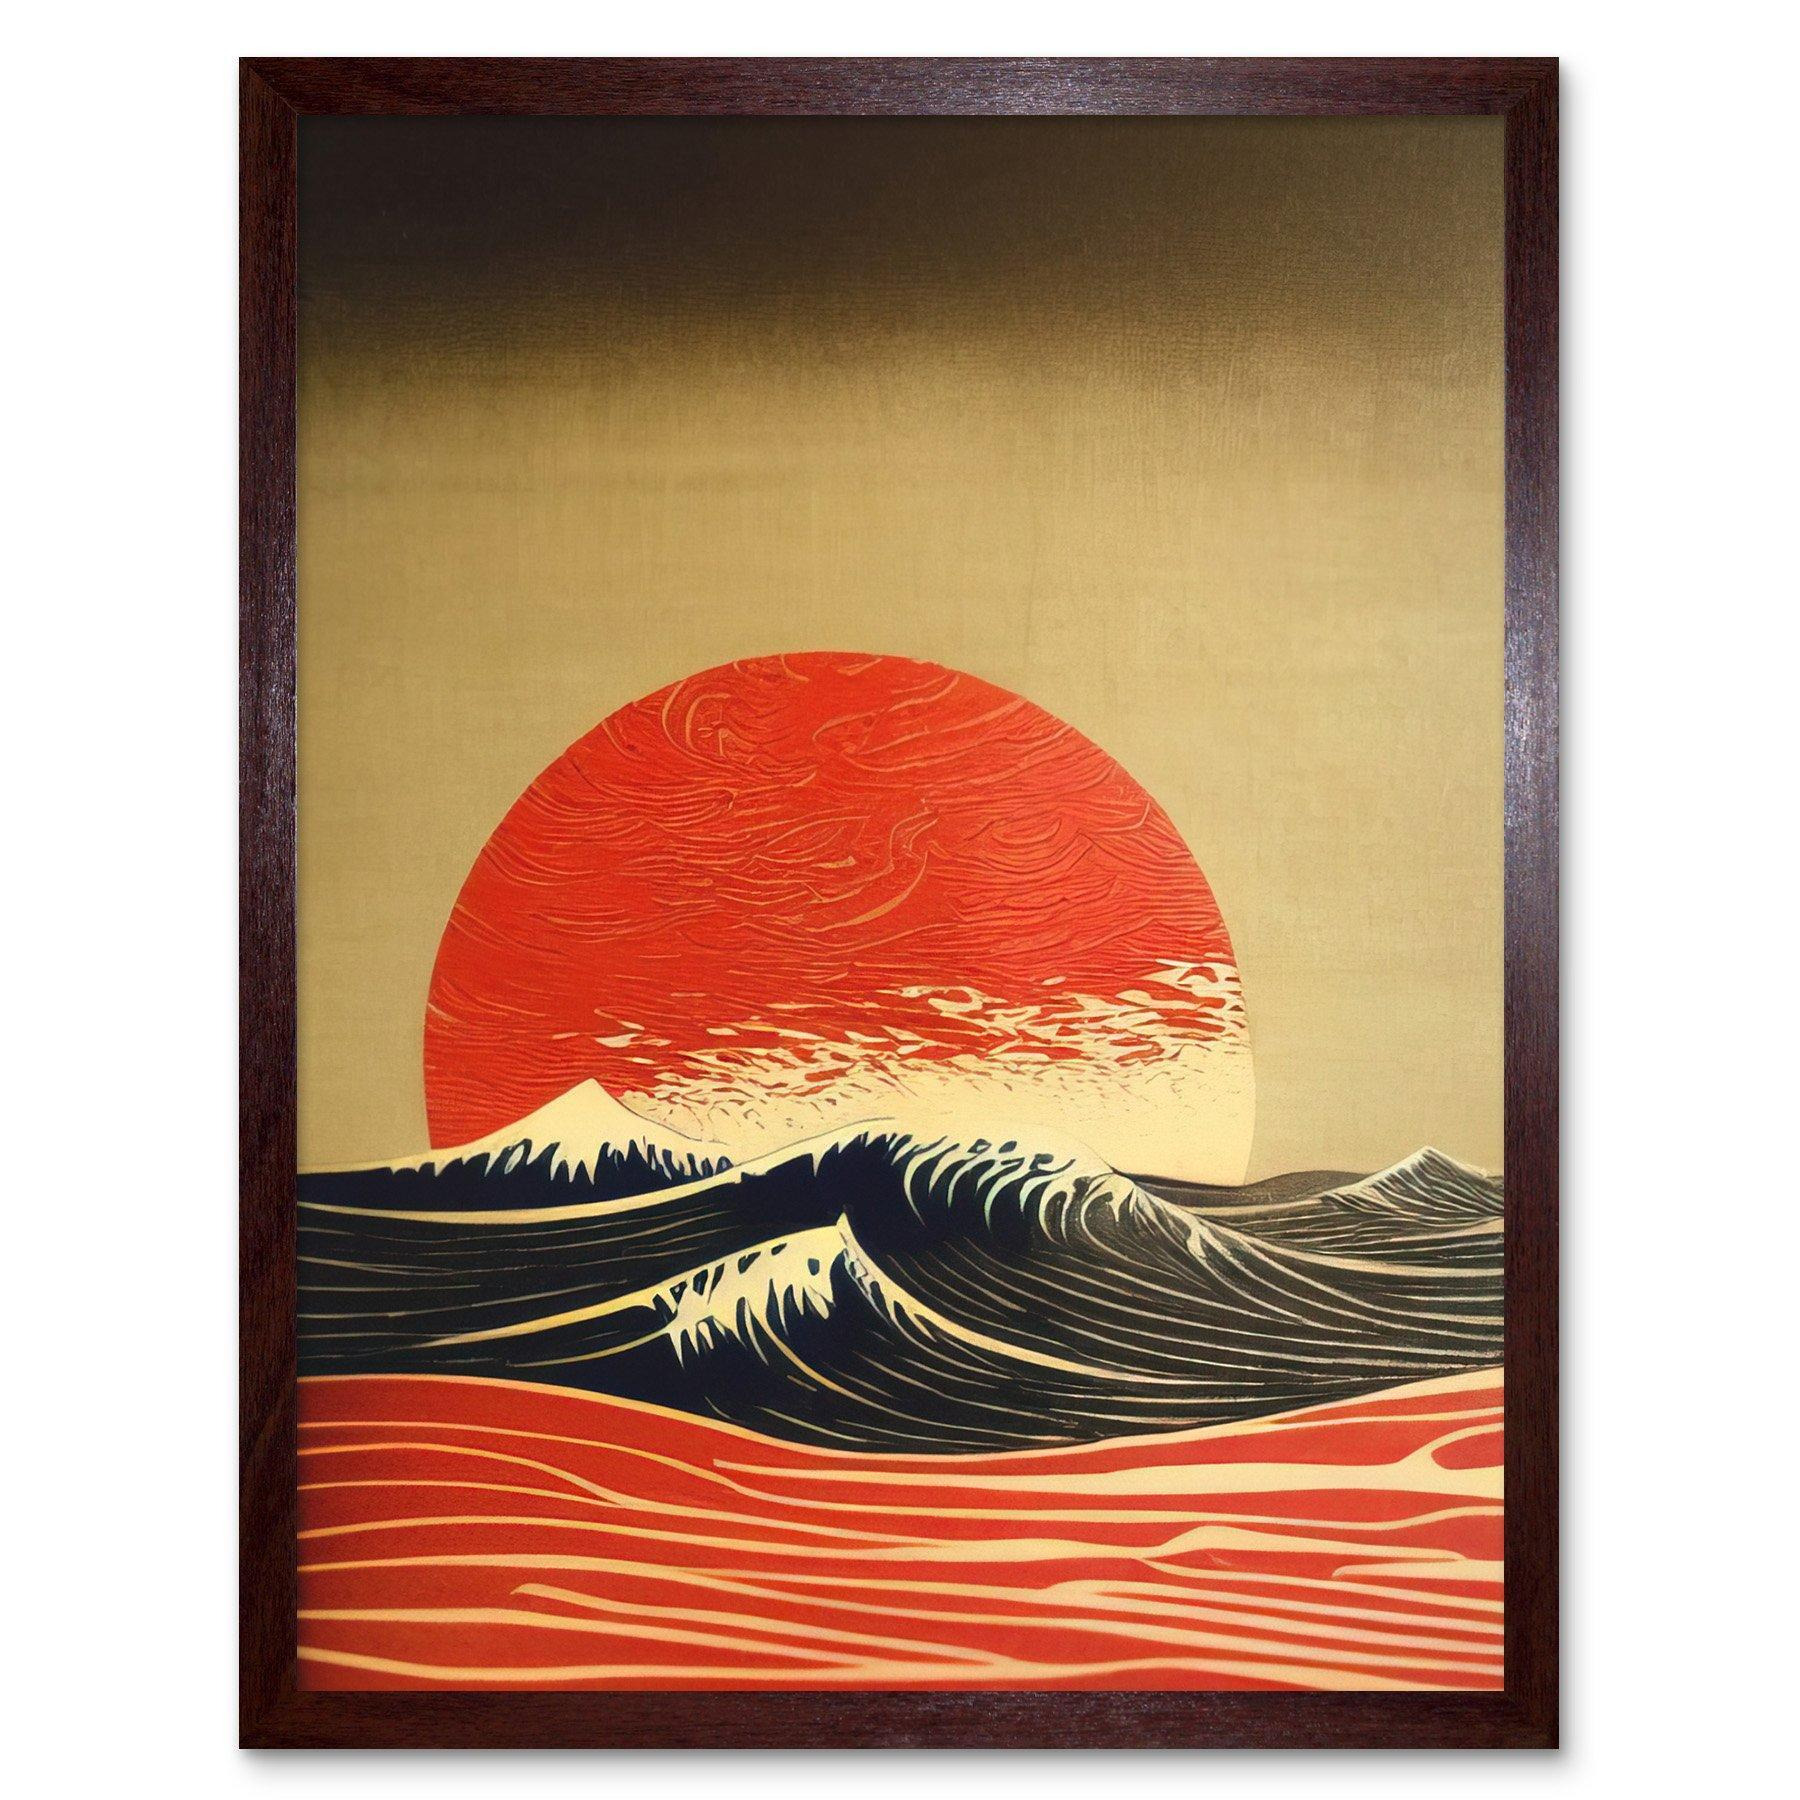 Modern Kanagawa Waves Red Sunset Linocut Art Print Framed Poster Wall Decor 12x16 inch - image 1